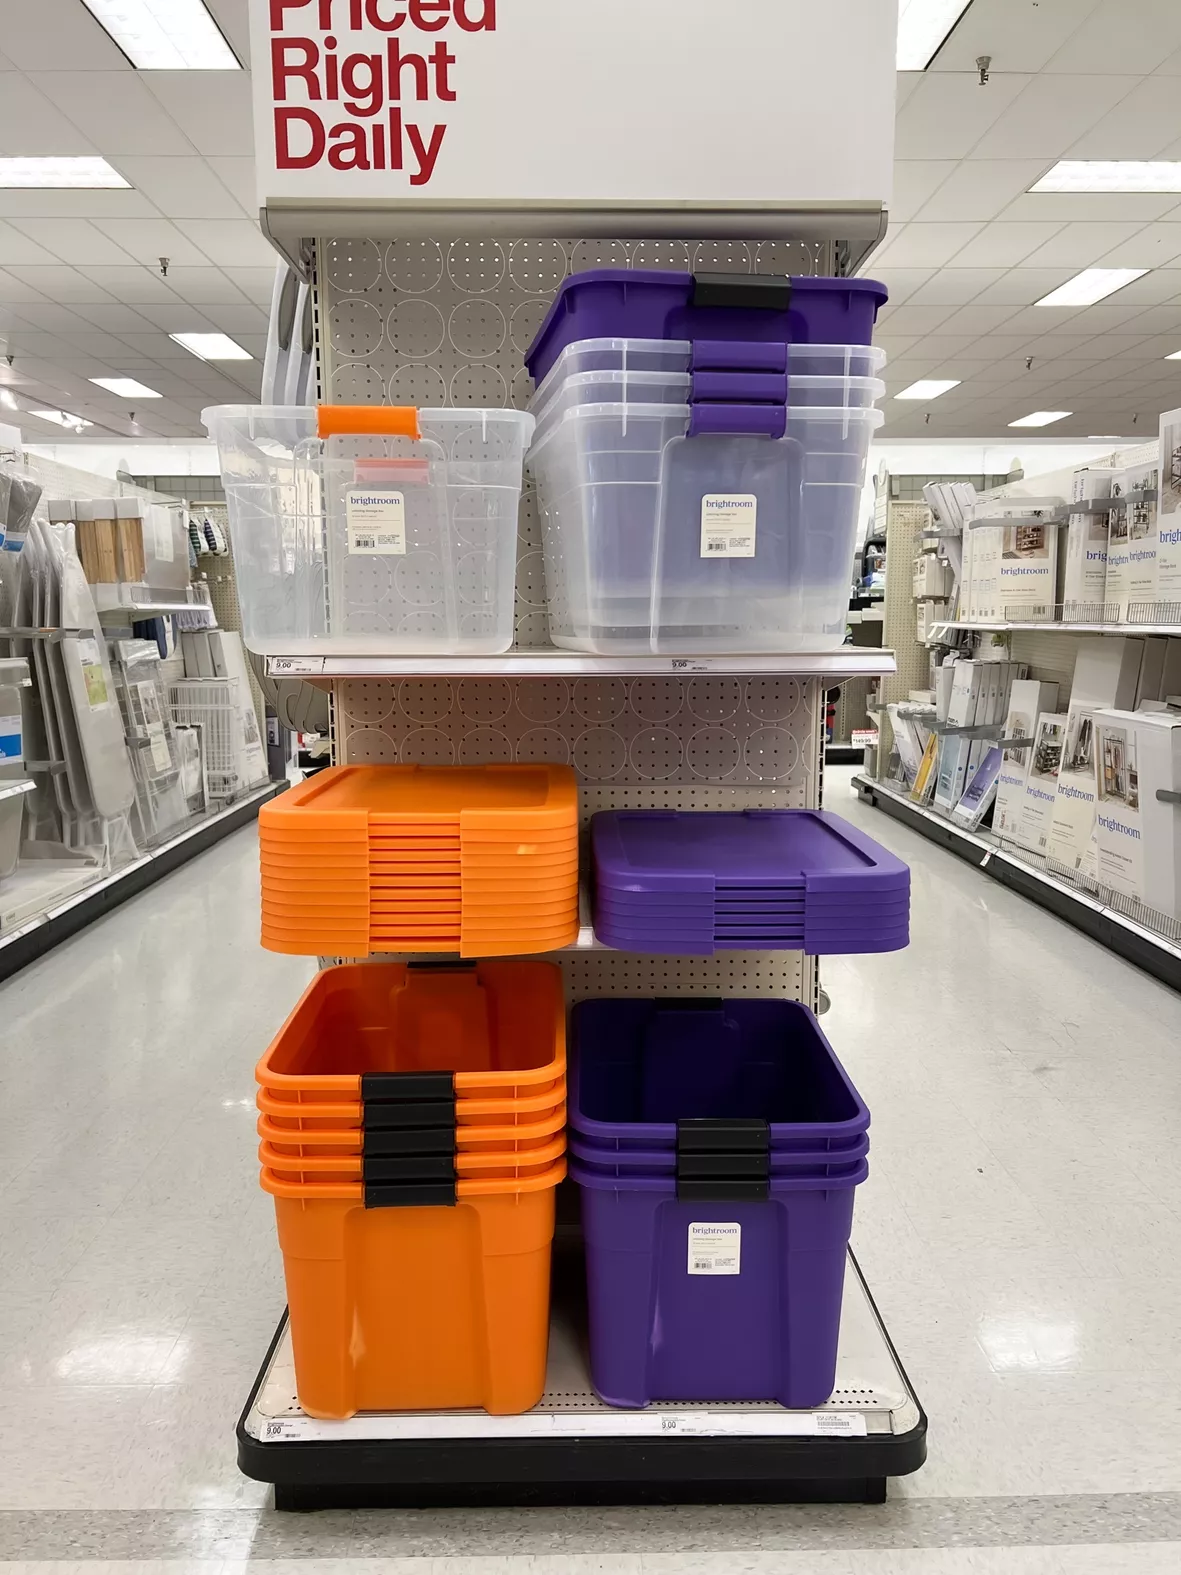 20gal Latching Storage Tote Orange … curated on LTK